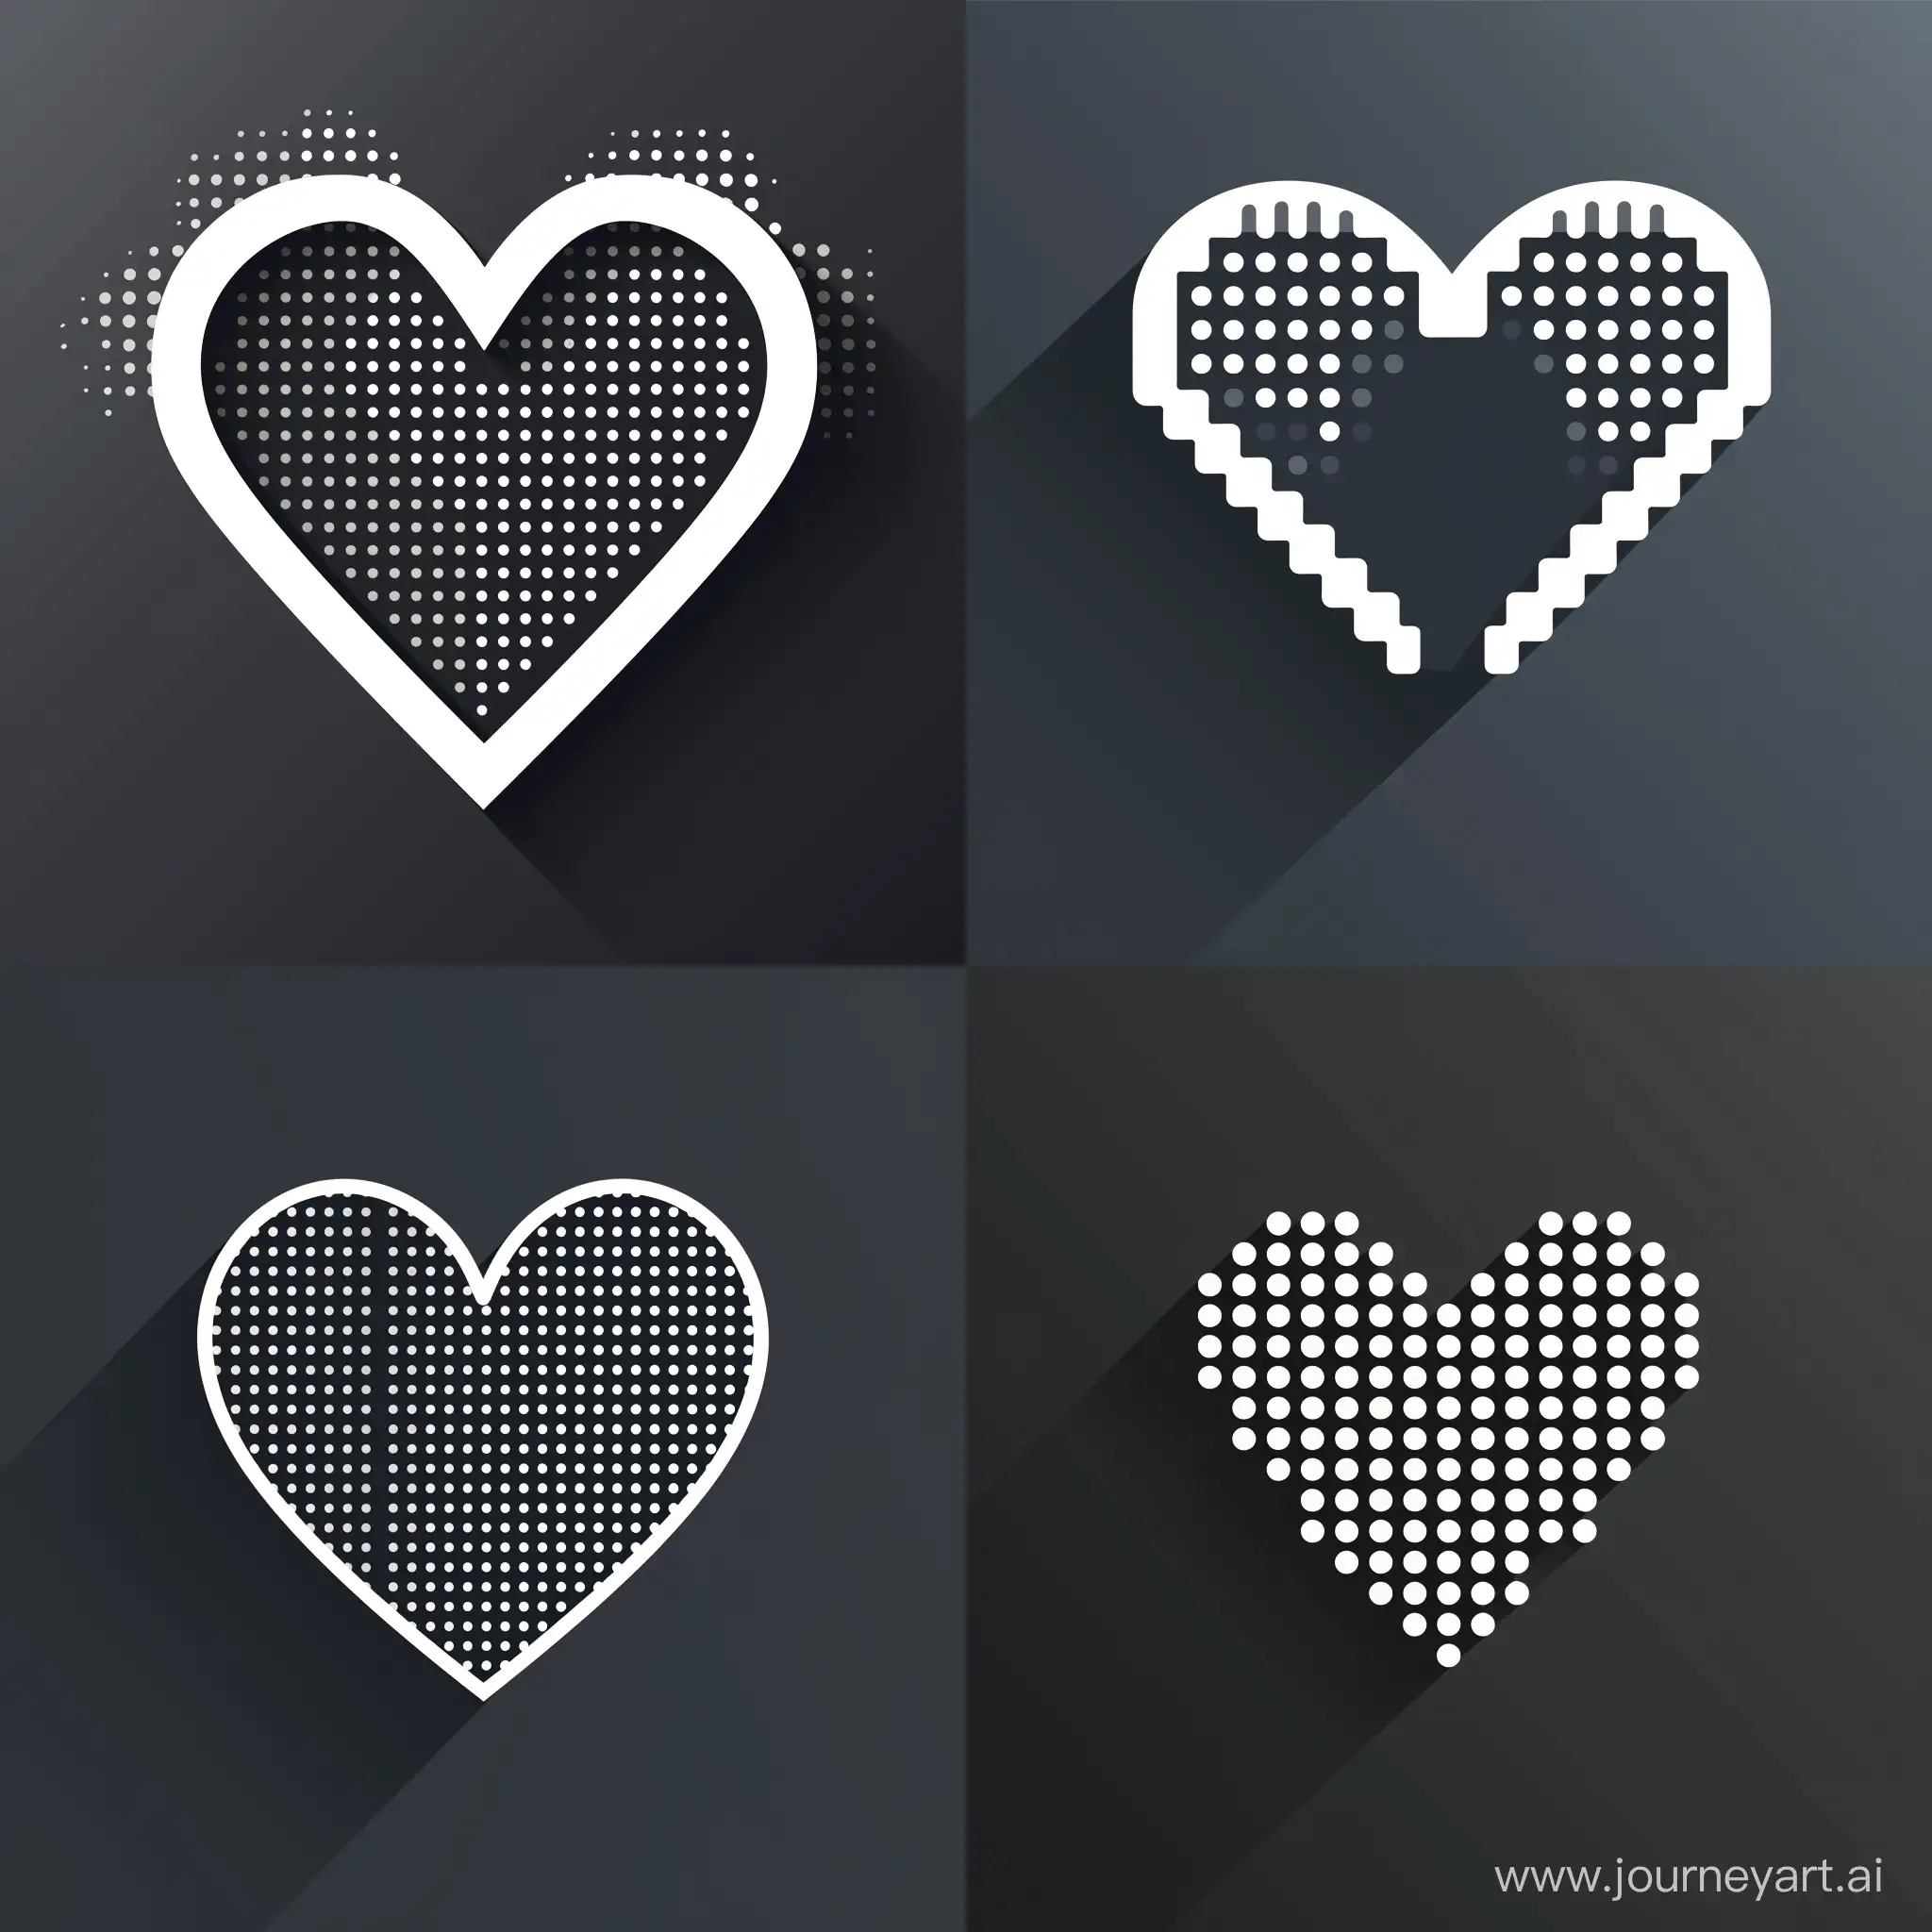 Minimalist-White-Heart-Icon-on-Flat-Black-Background-with-Dot-Matrix-Display